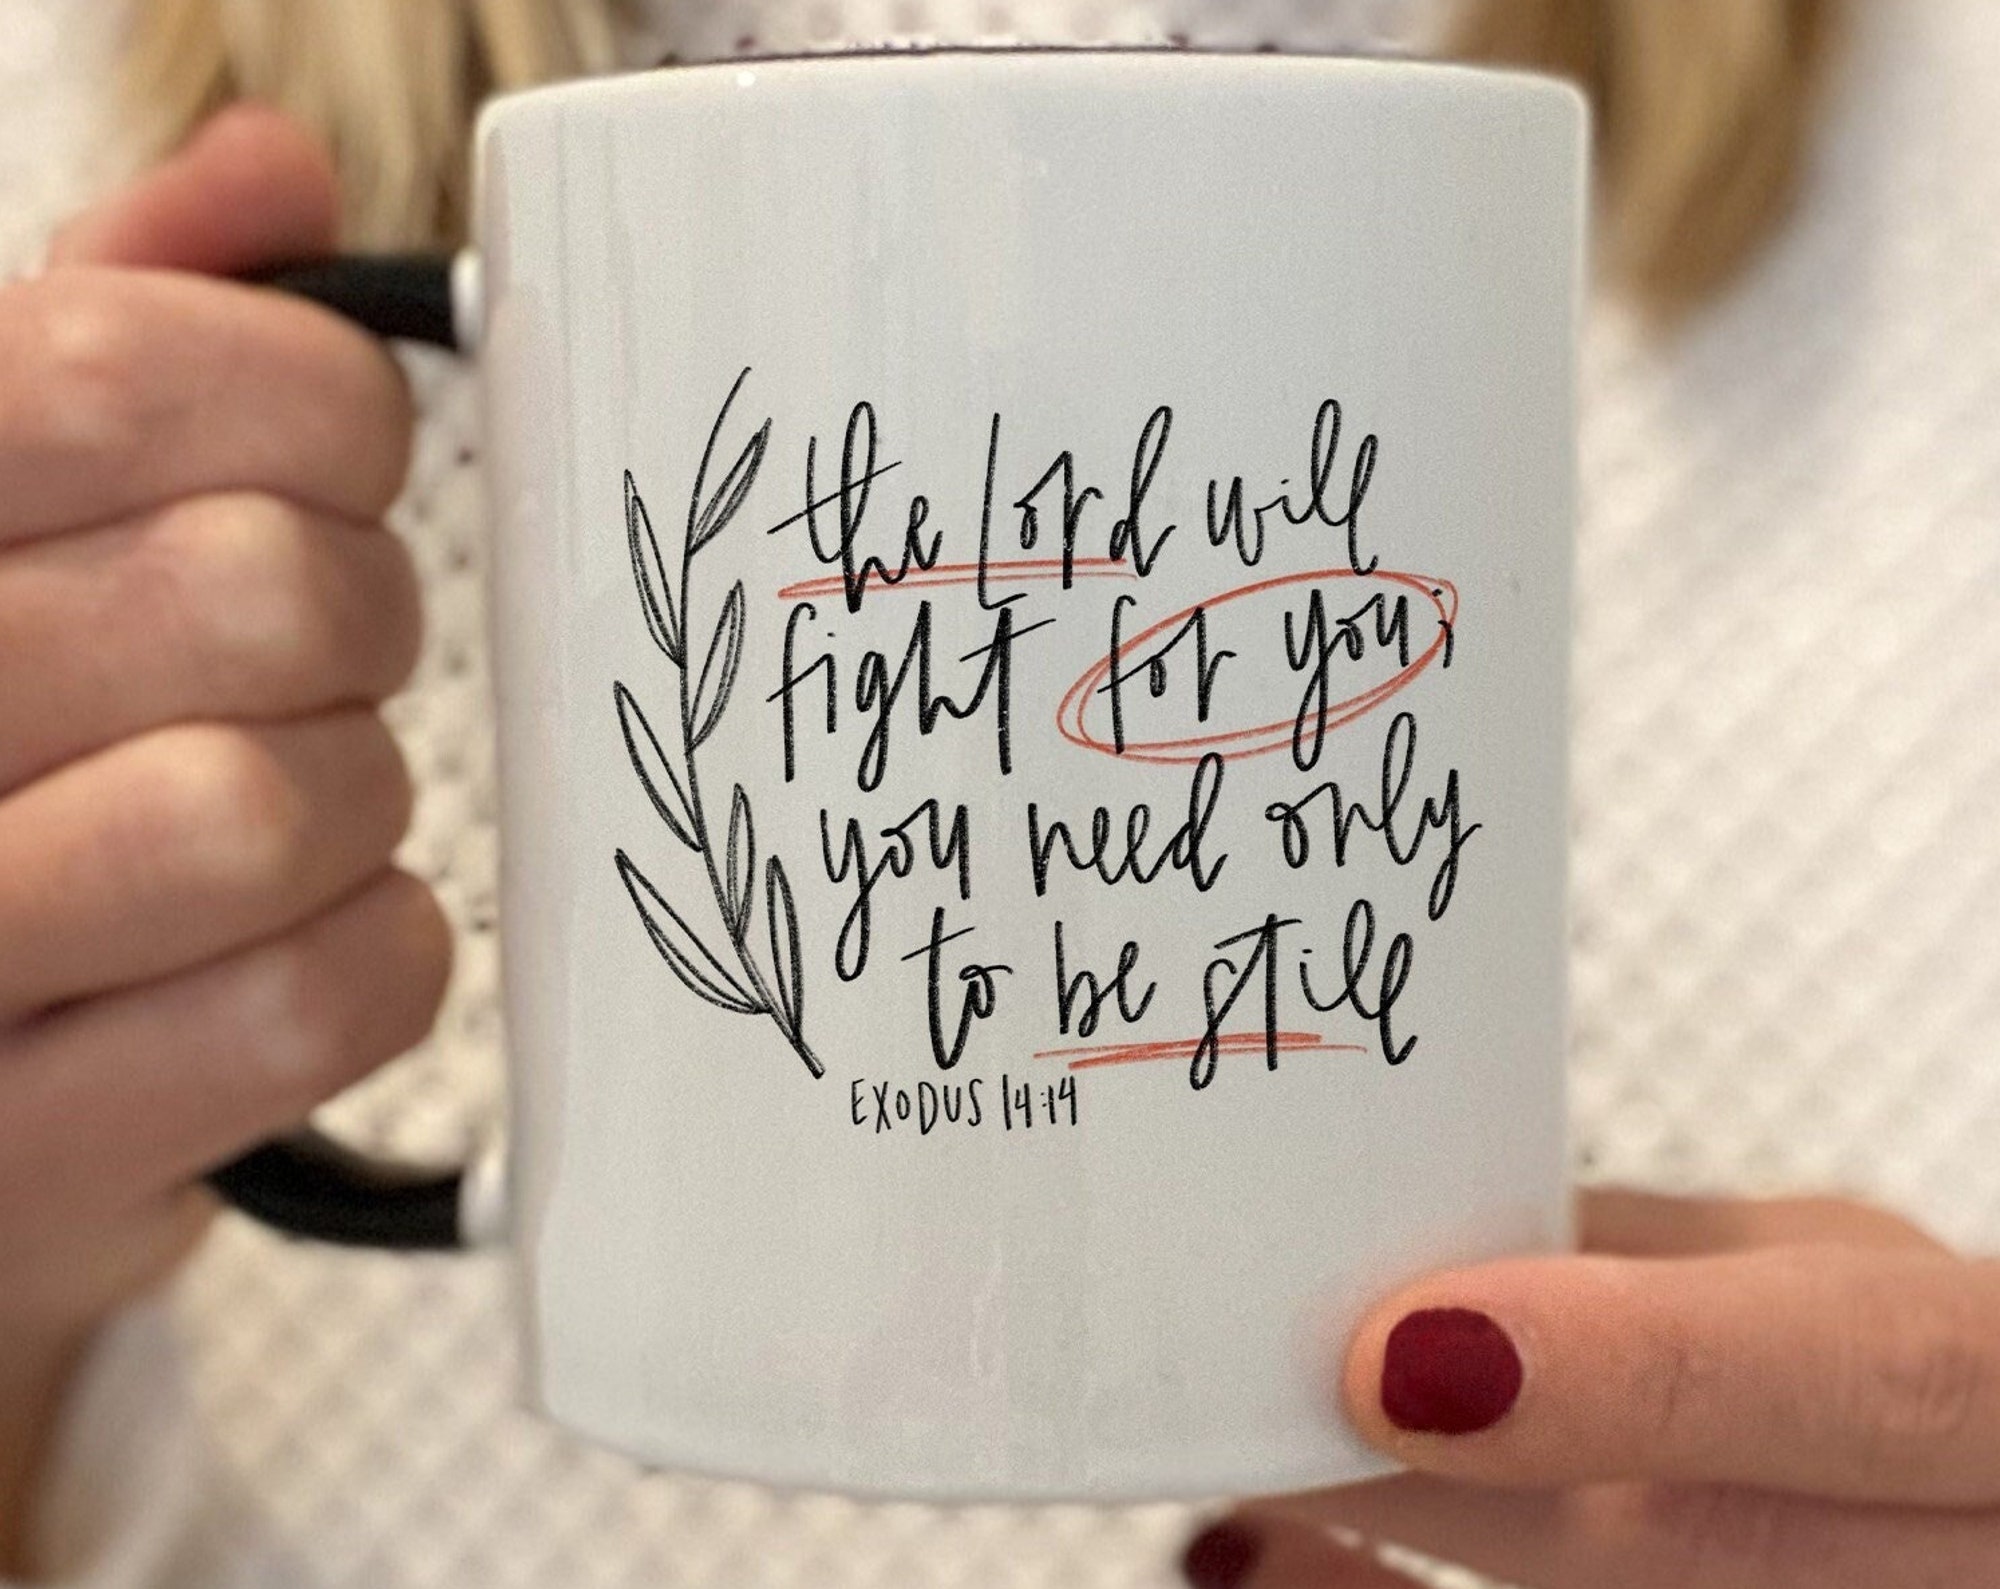 Discover Christian be still mug